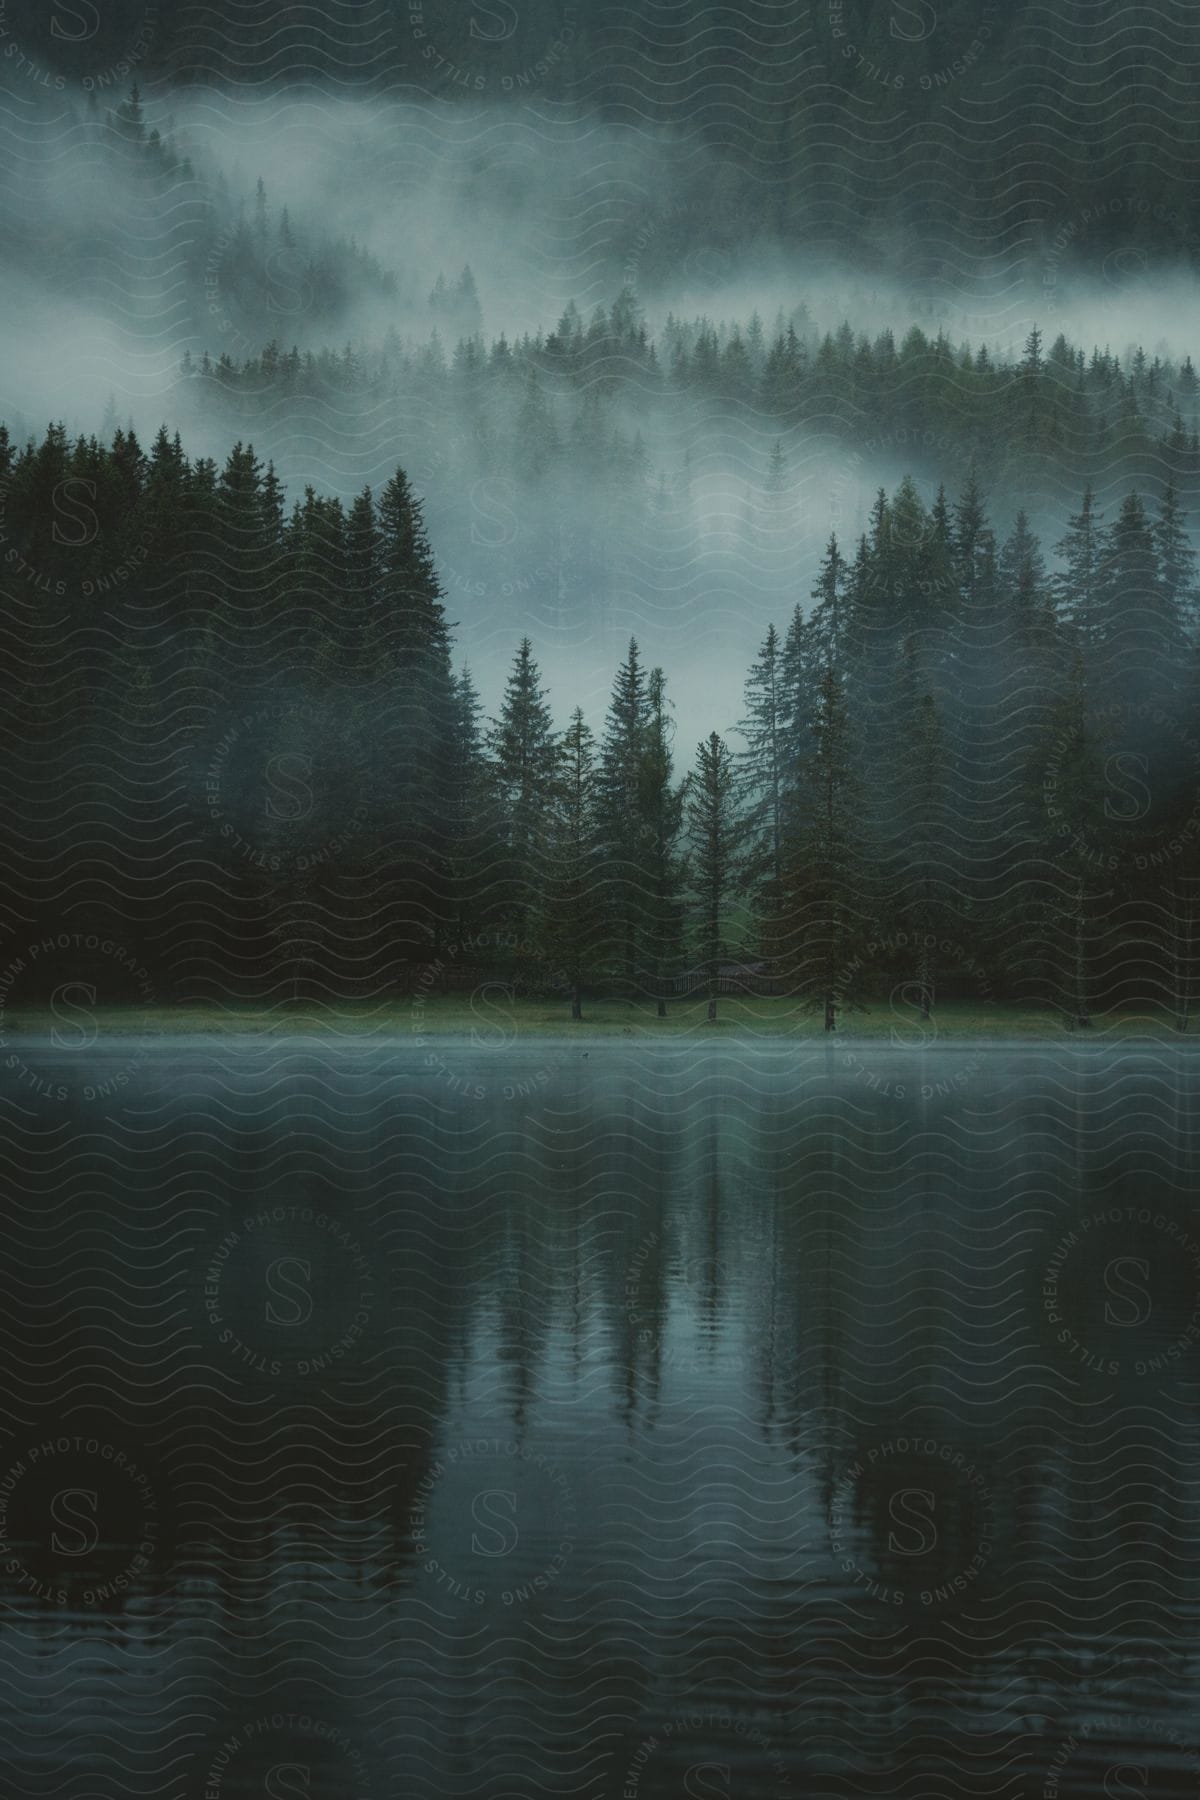 Dense fog envelops the forest along the shoreline of a lake